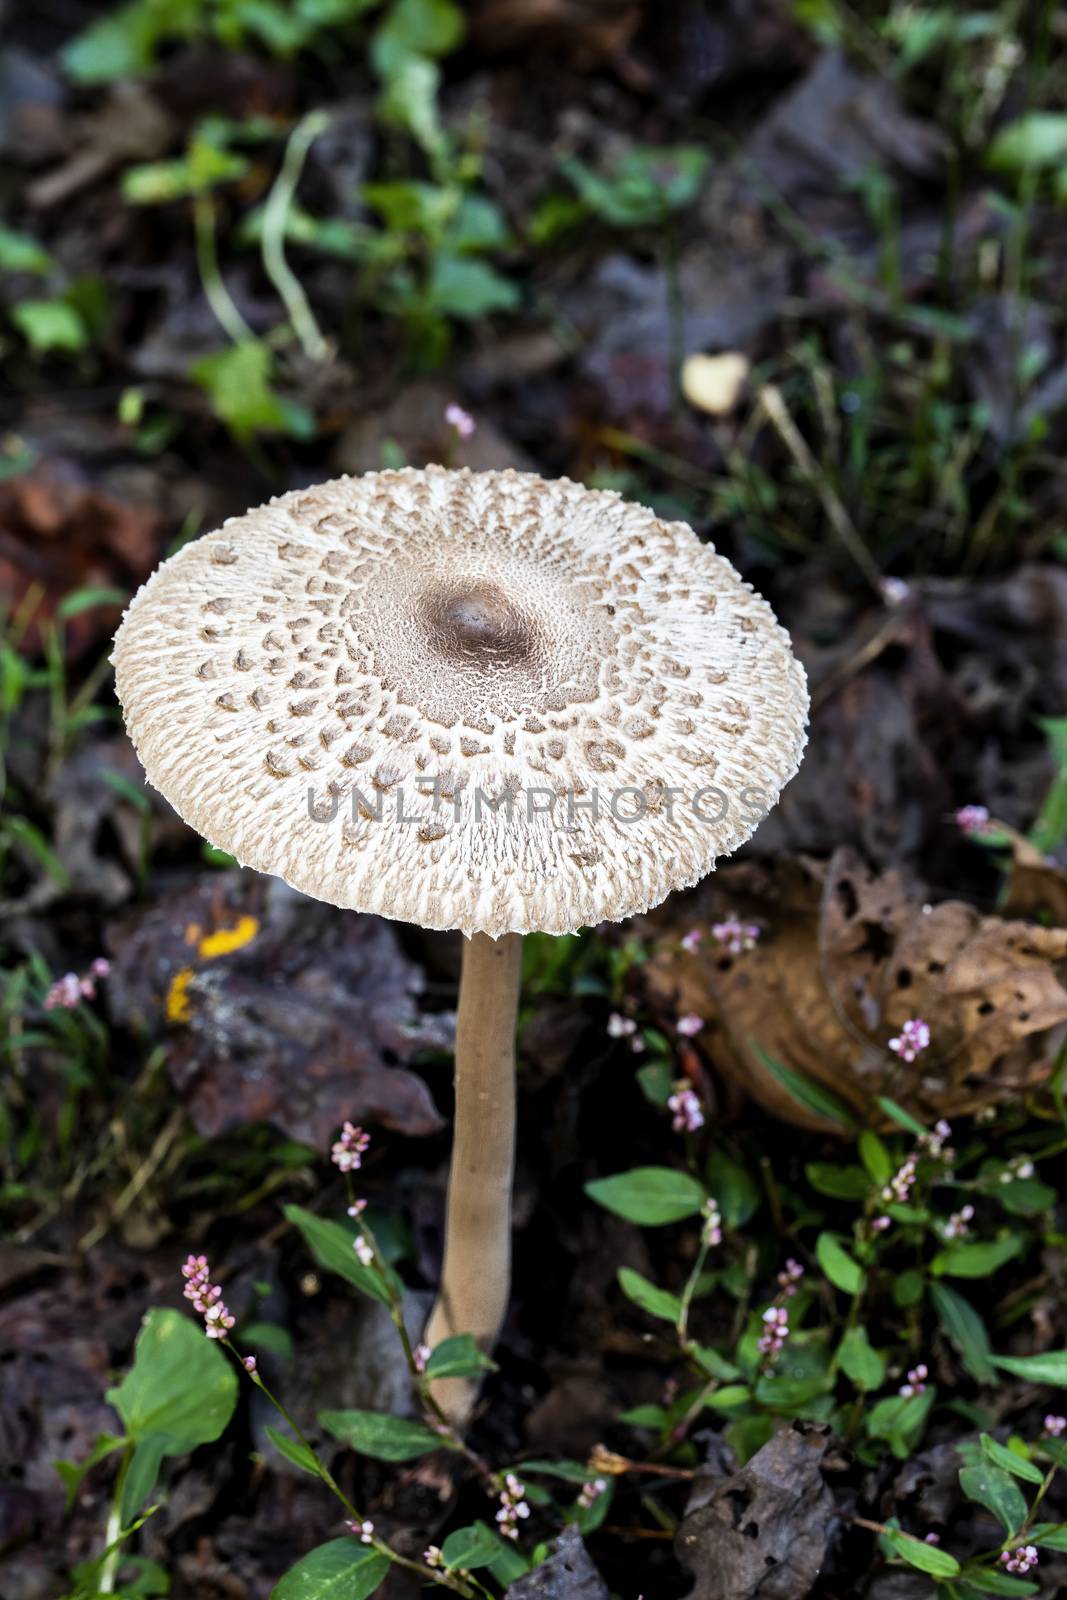 Solitary Shaggy Parasol Mushroom by CharlieFloyd